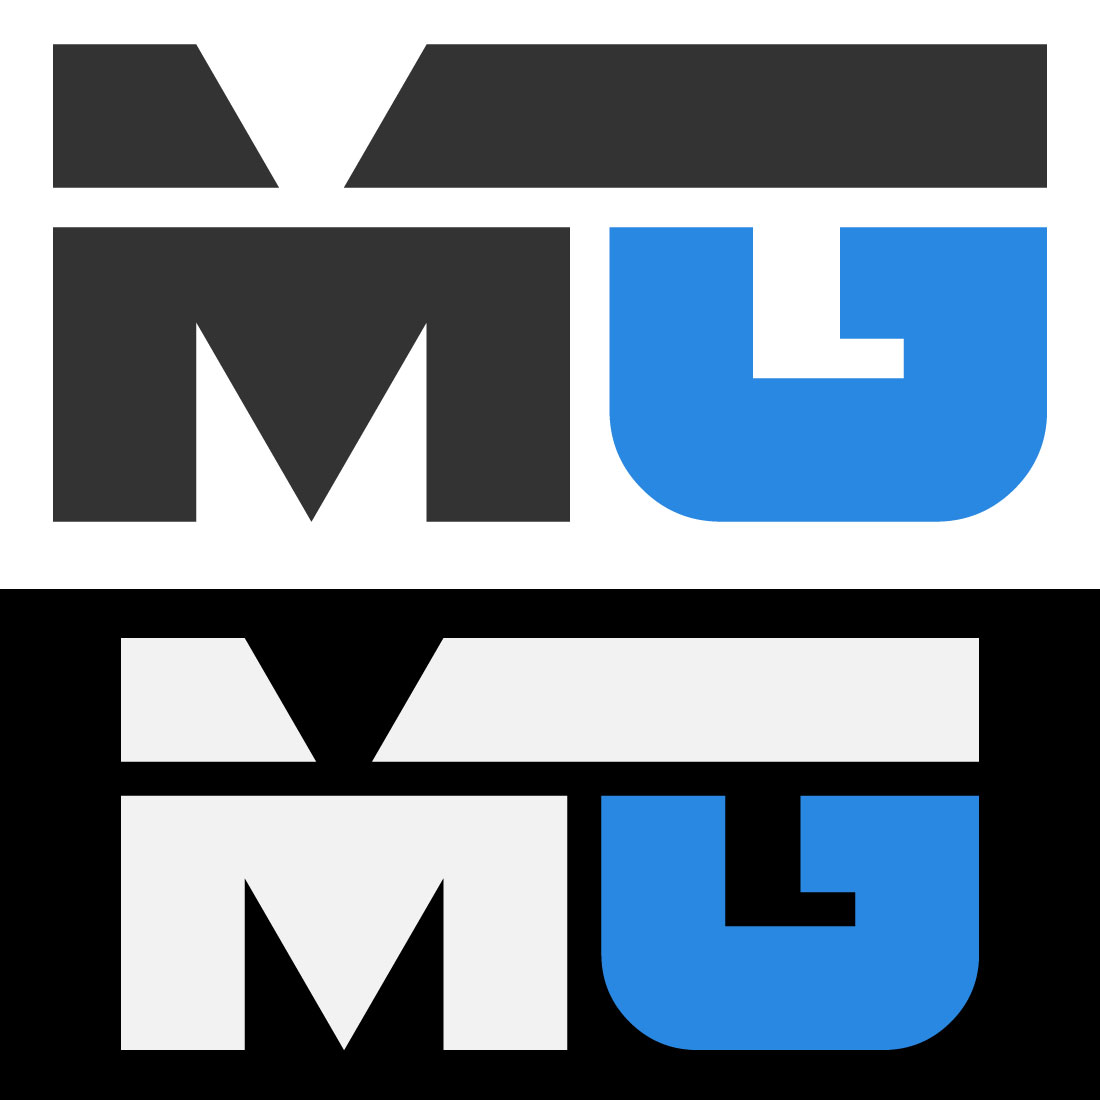 Logo MG Letter Design Template cover image.